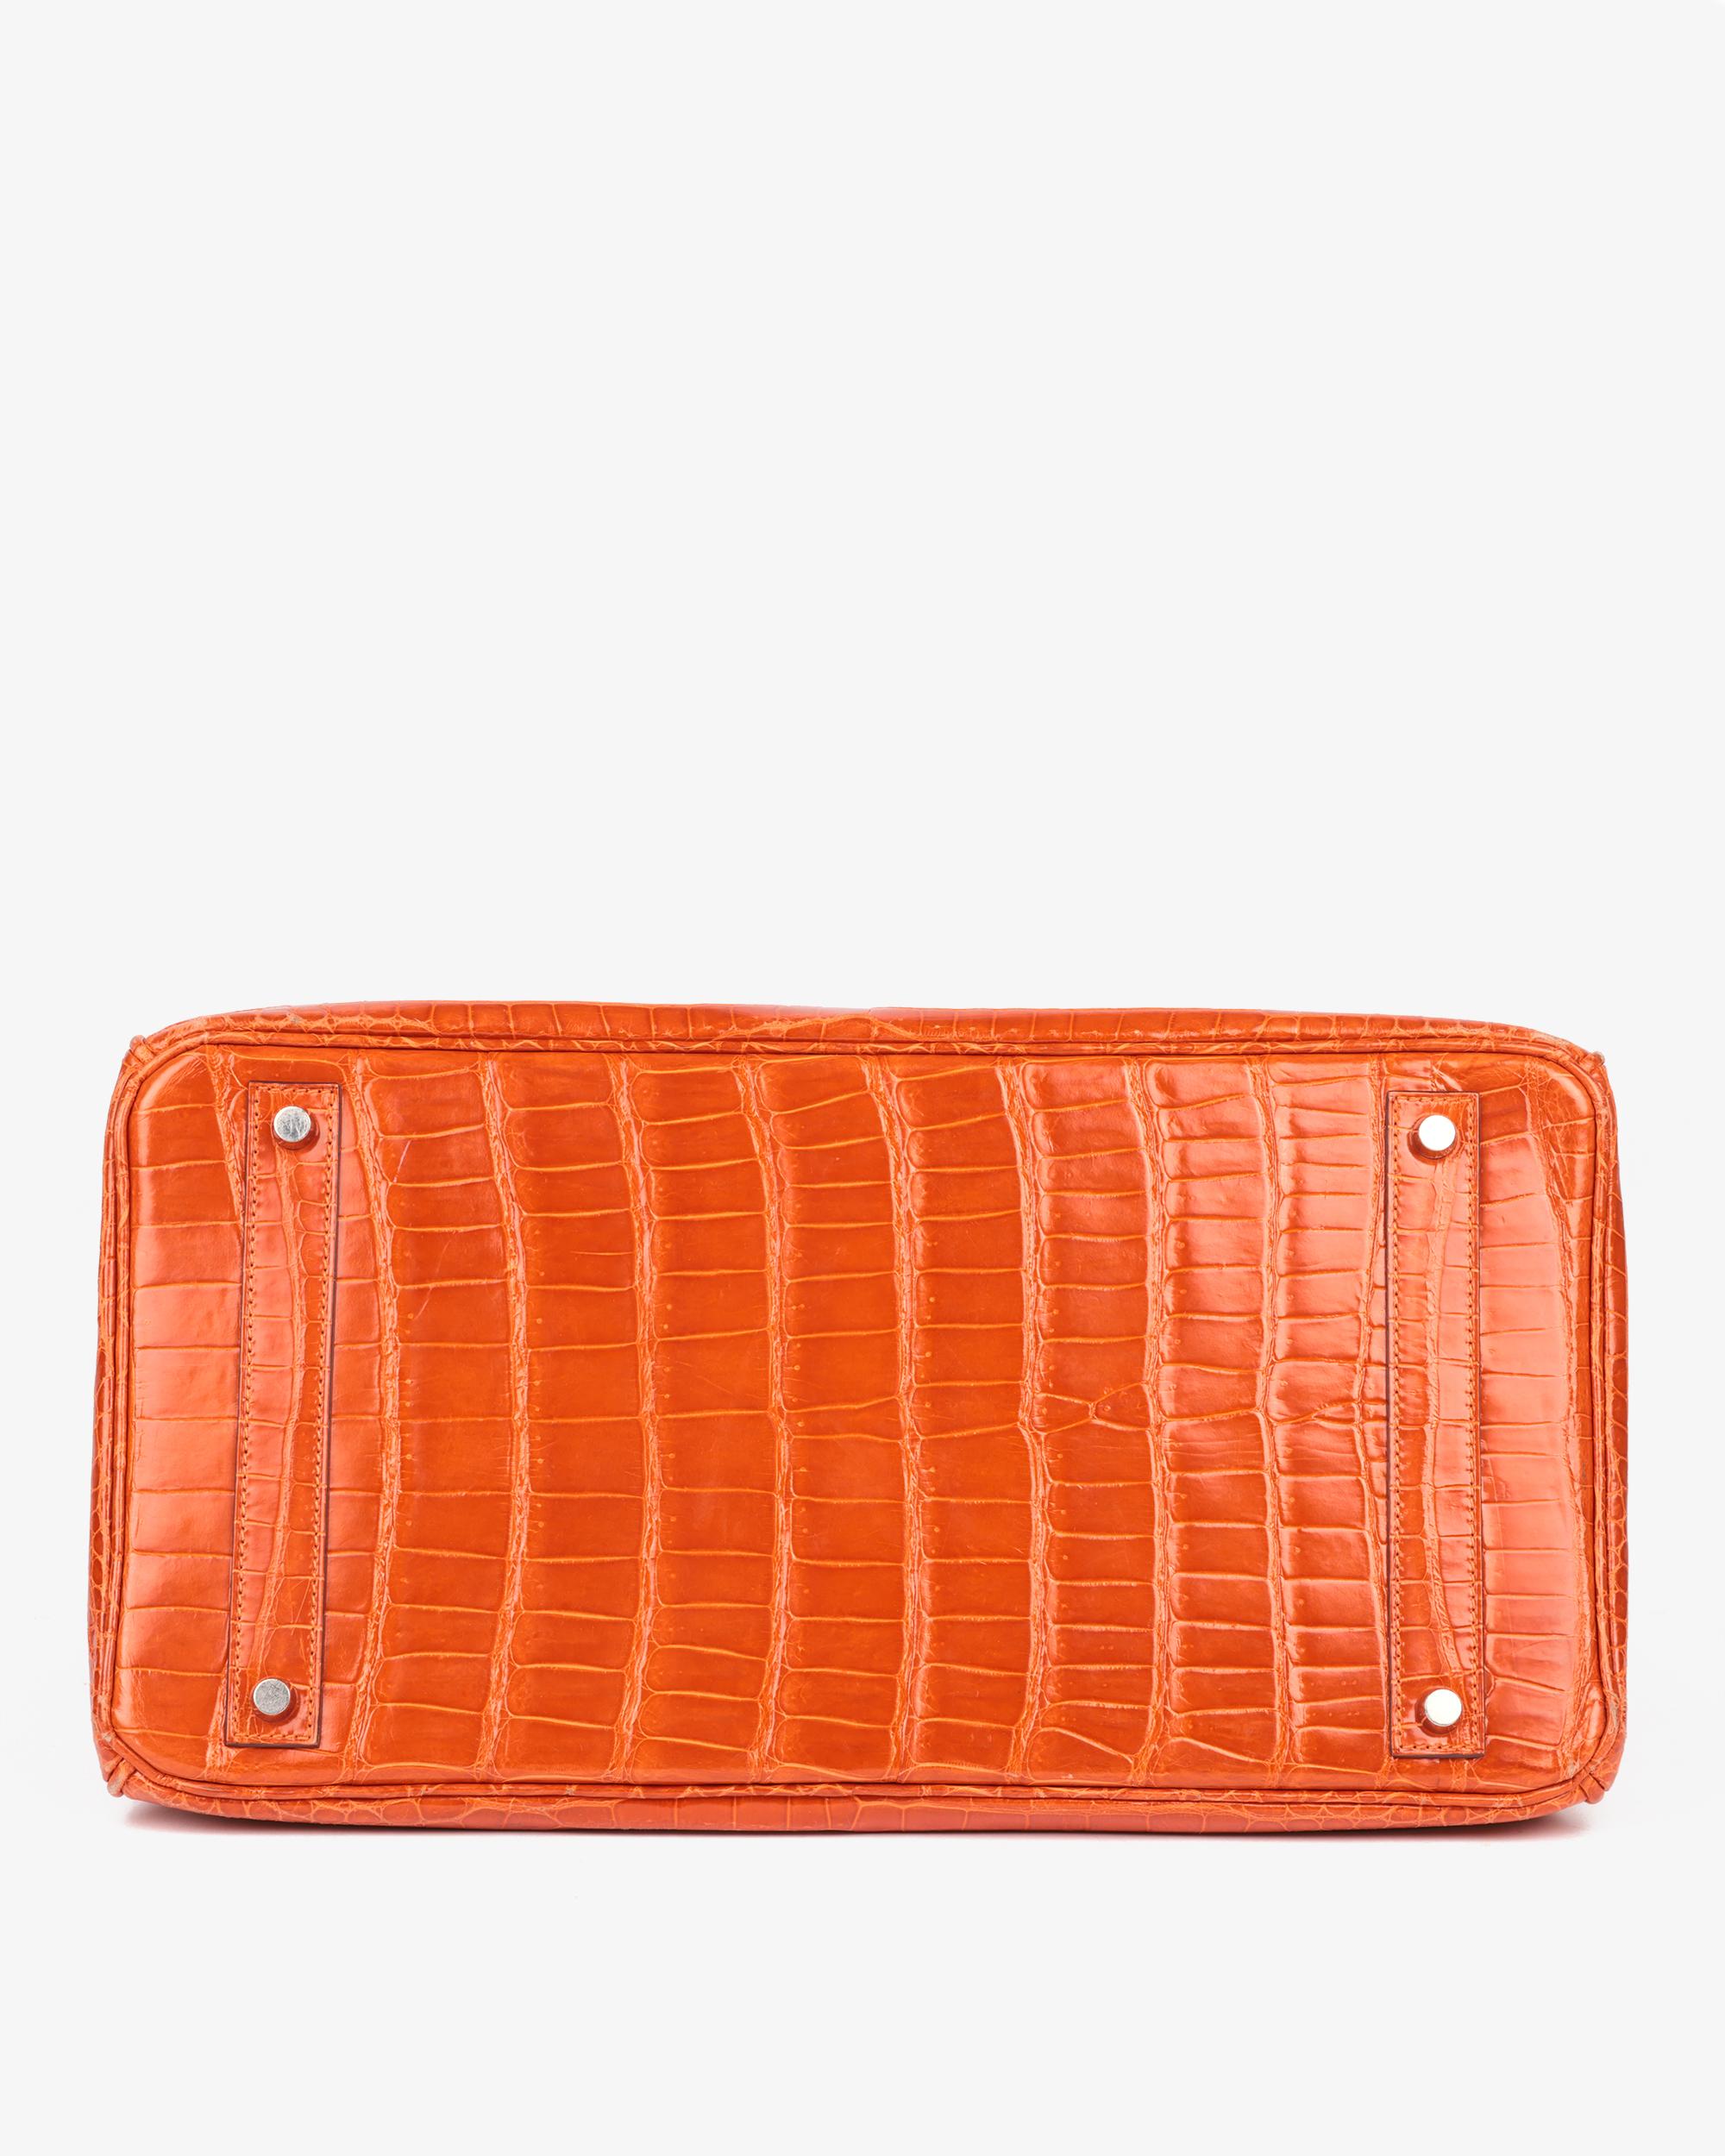 Hermès Orange Shiny Porosus Crocodile Leather Birkin 40cm For Sale 1